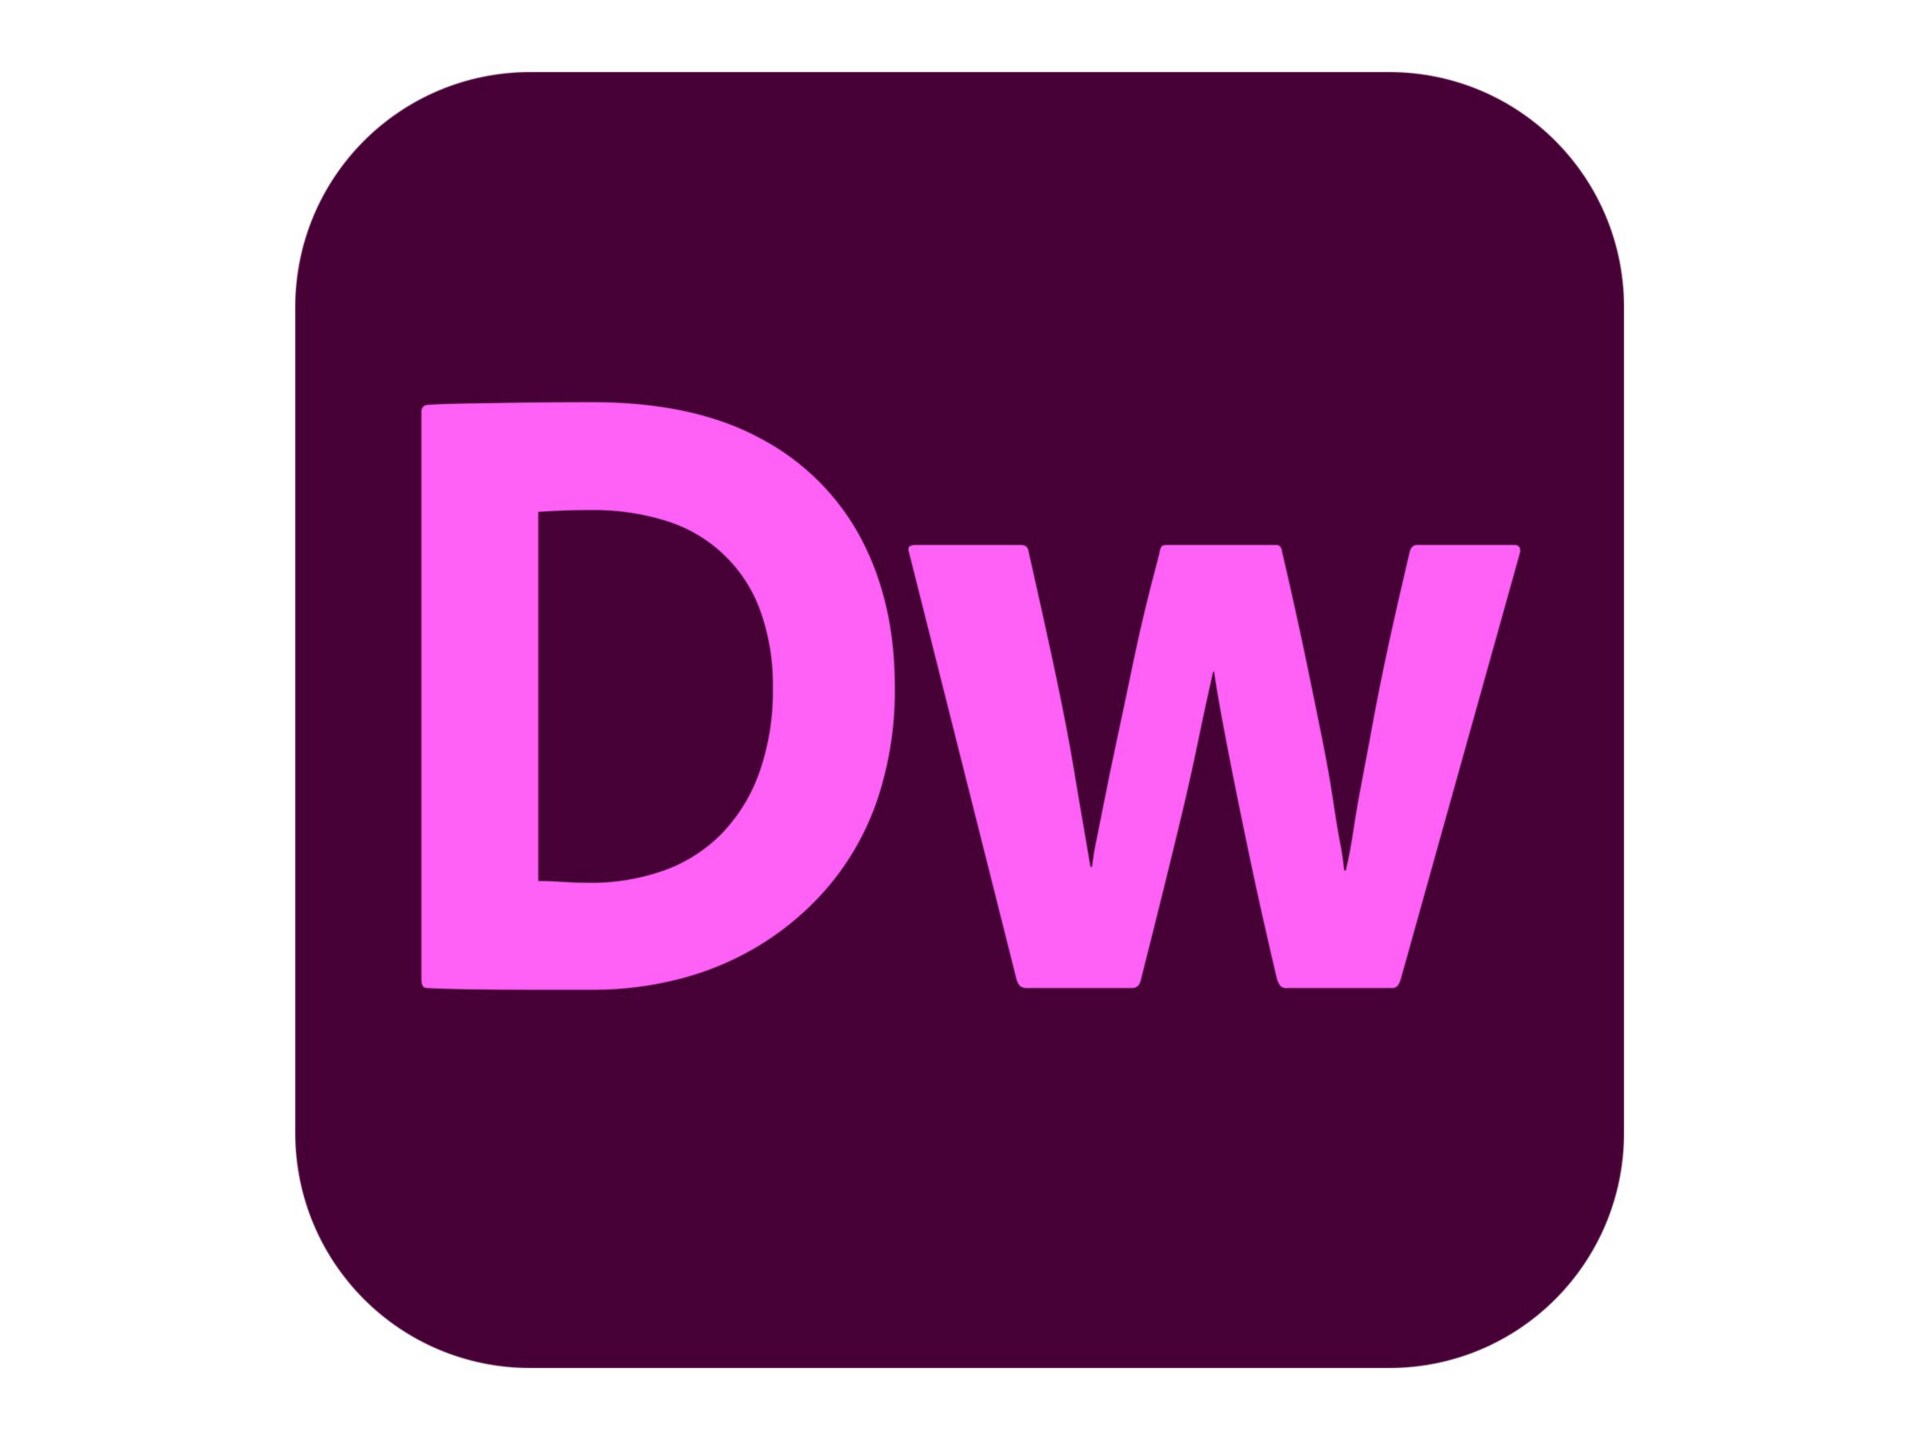 Adobe Dreamweaver CC - Enterprise Licensing Subscription New (7 months) - 1